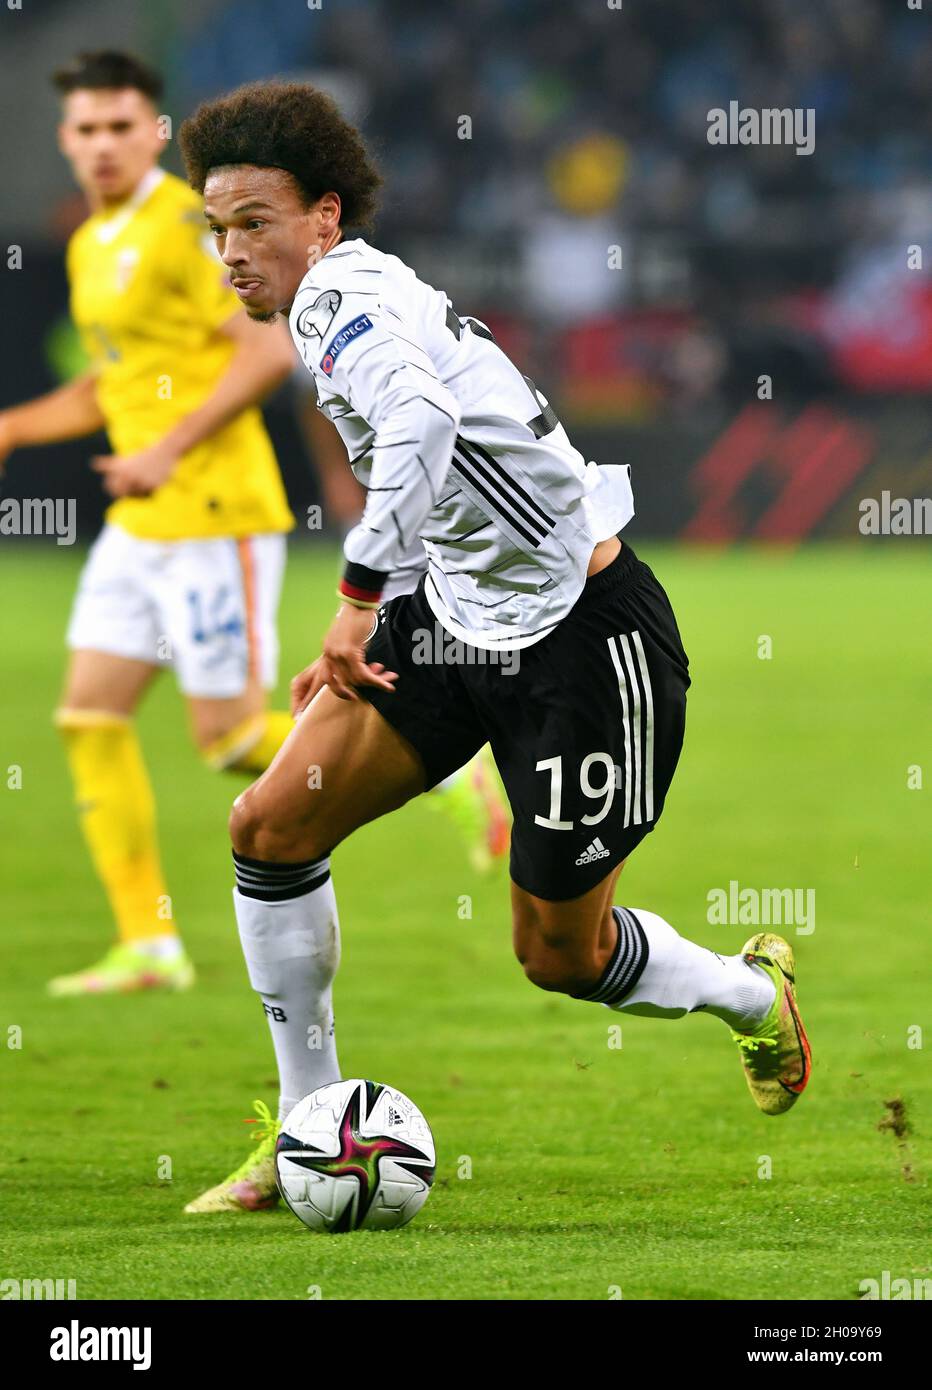 Qualificazione Coppa del mondo, Volksparkstadion Amburgo: Germania vs Romania; Leroy sane (GER) Foto Stock